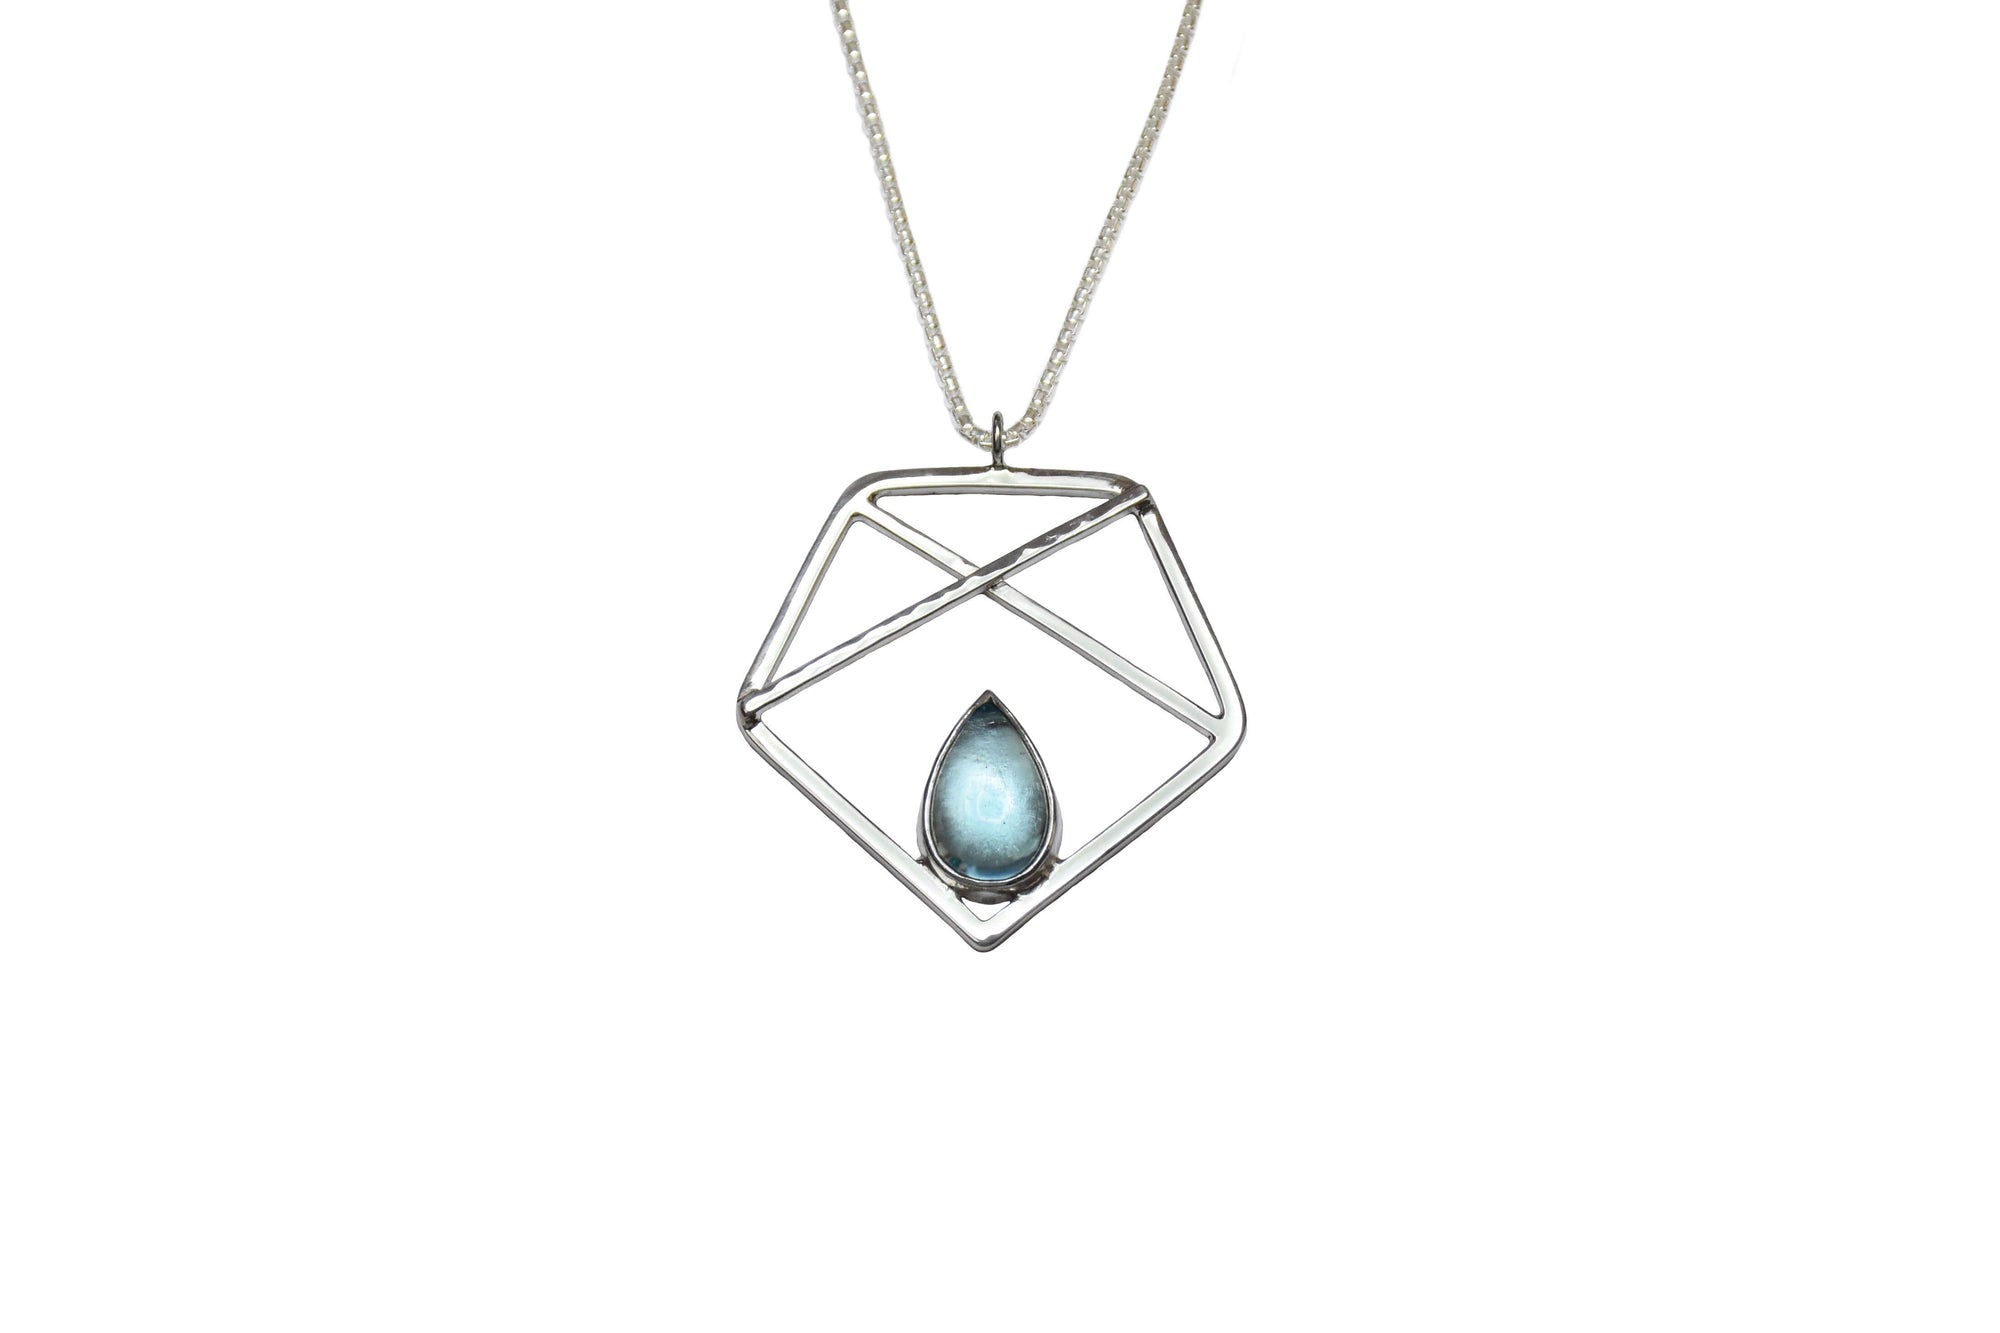 A handmade sterling silver pentagon pendant with sky blue topaz